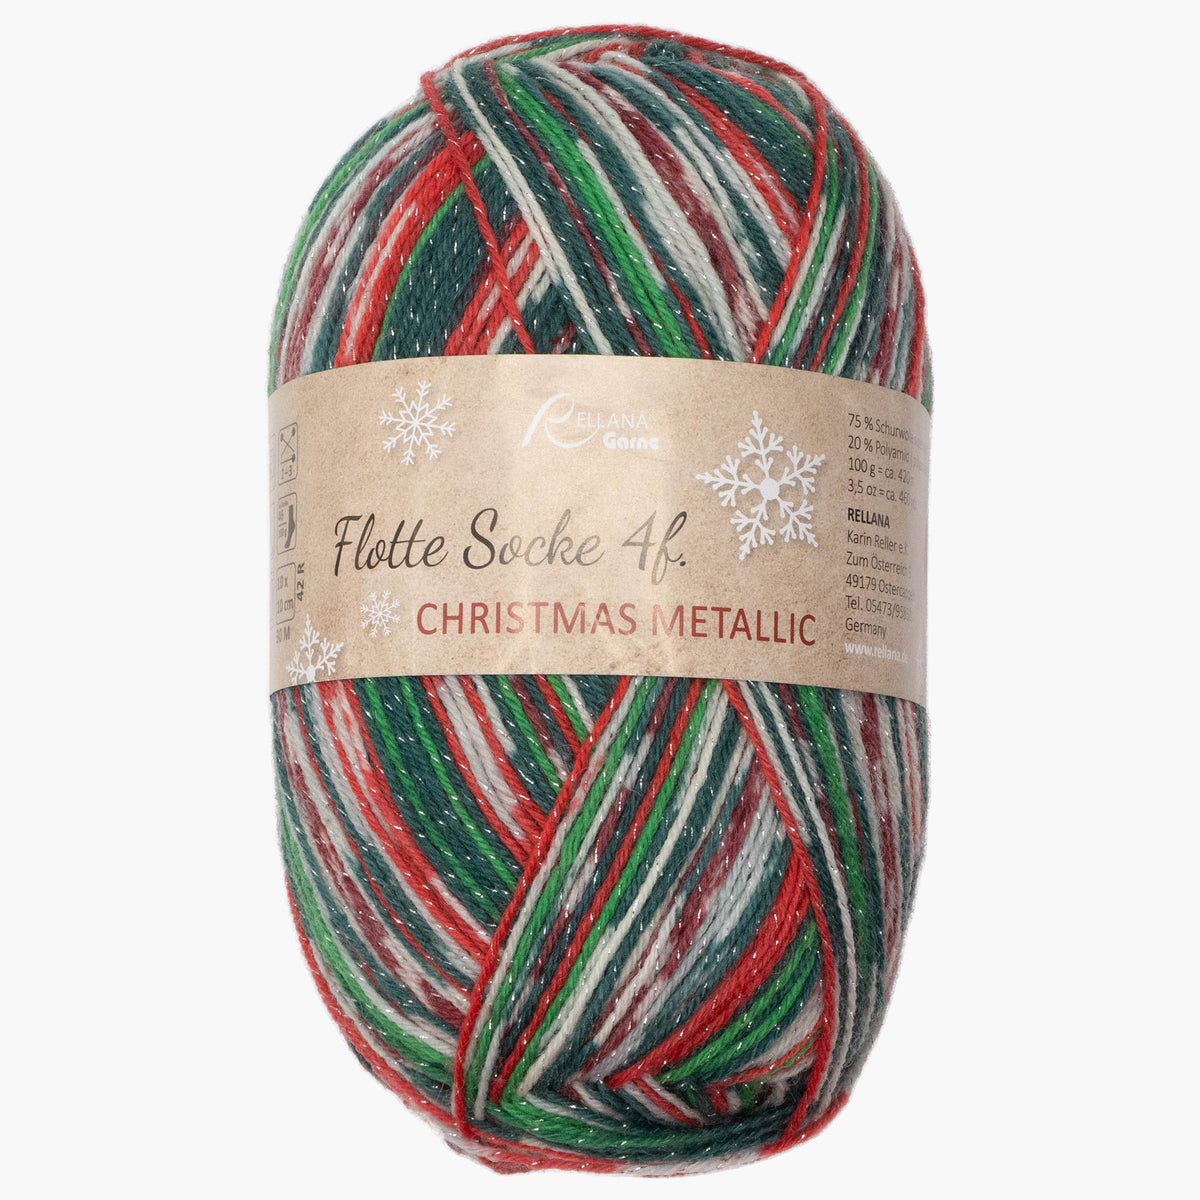 Flotte Socke | Christmas Metallic